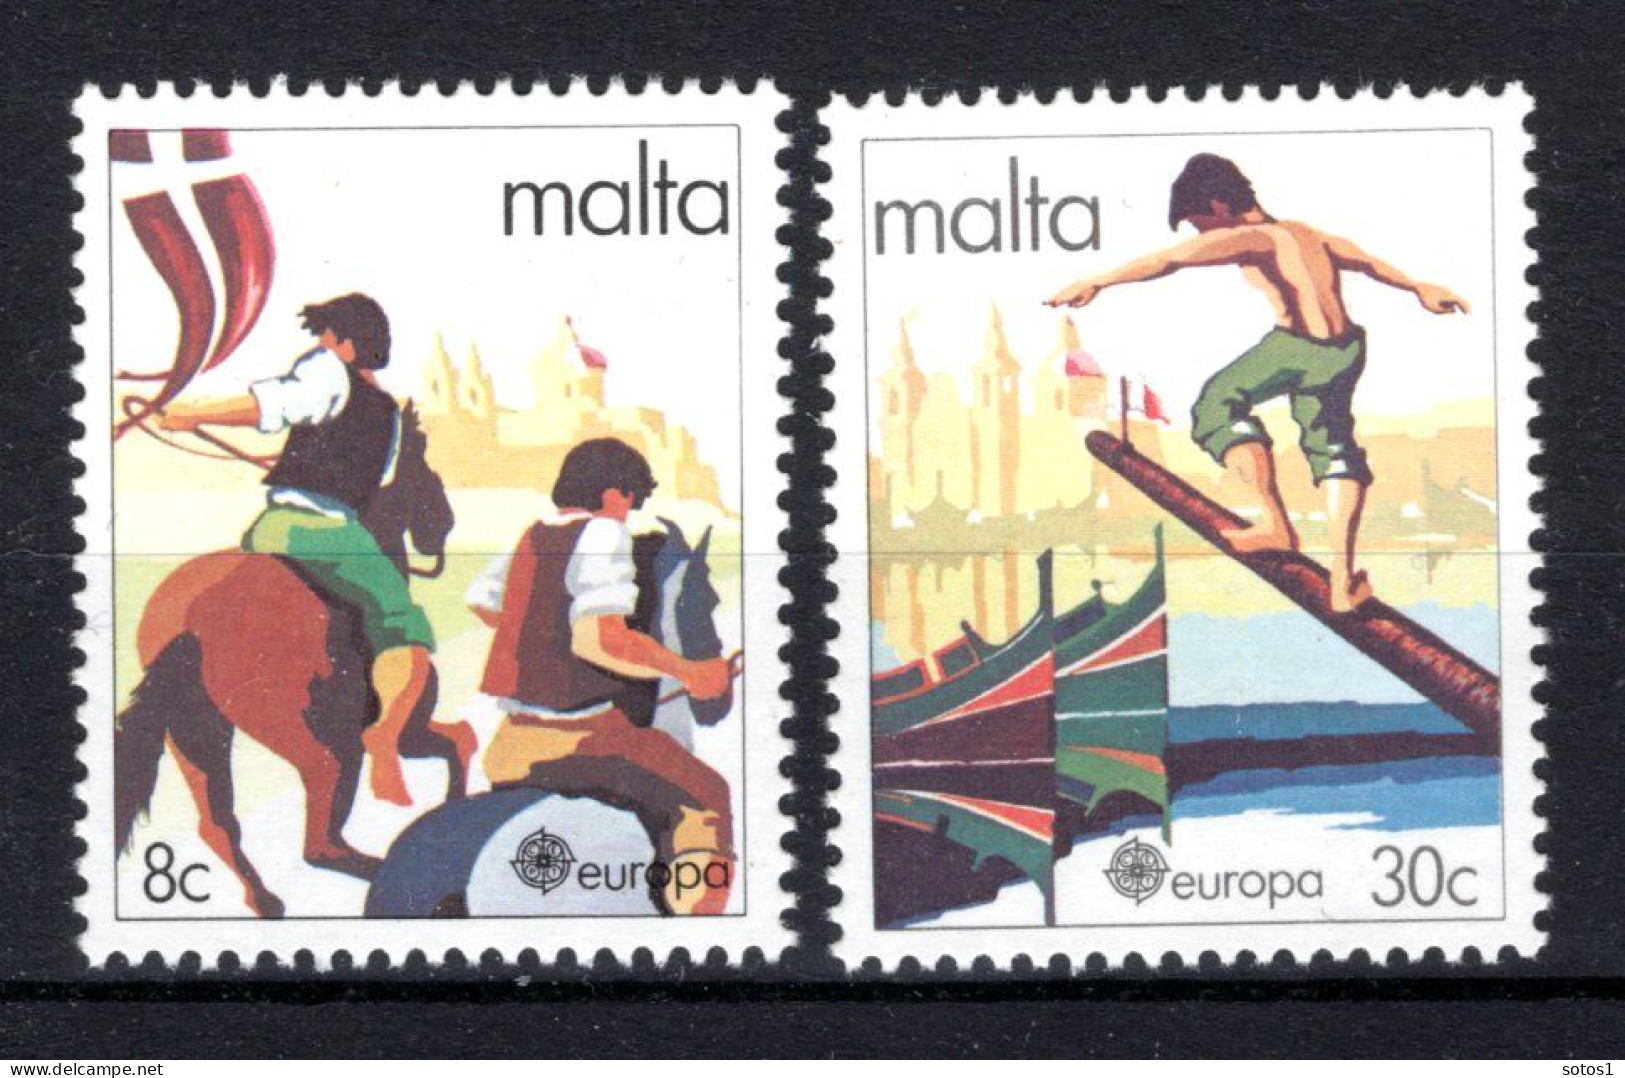 (B) Malta CEPT 628/629 MNH** 1981 - 1981